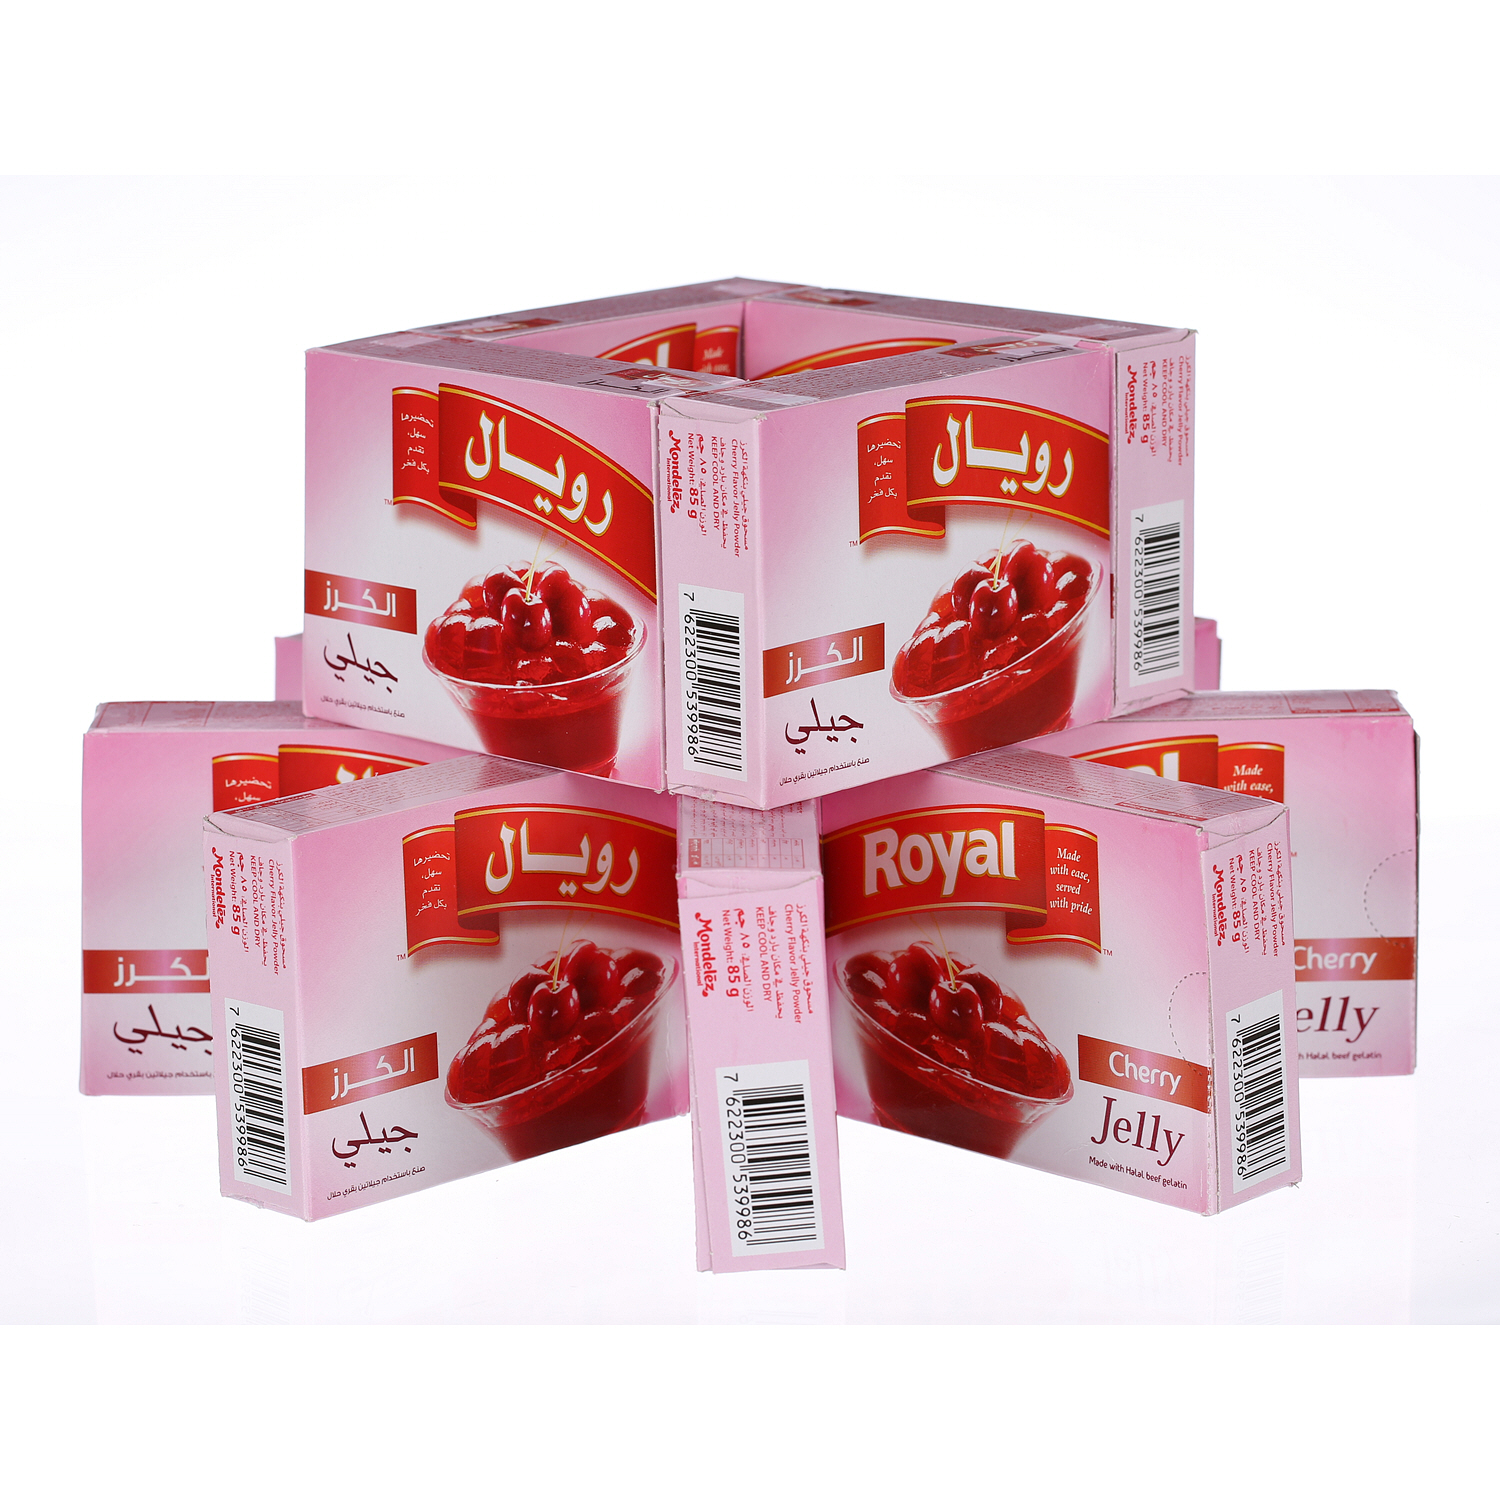 Royal Cherry Jelly Powder 85 g × 12 Pieces